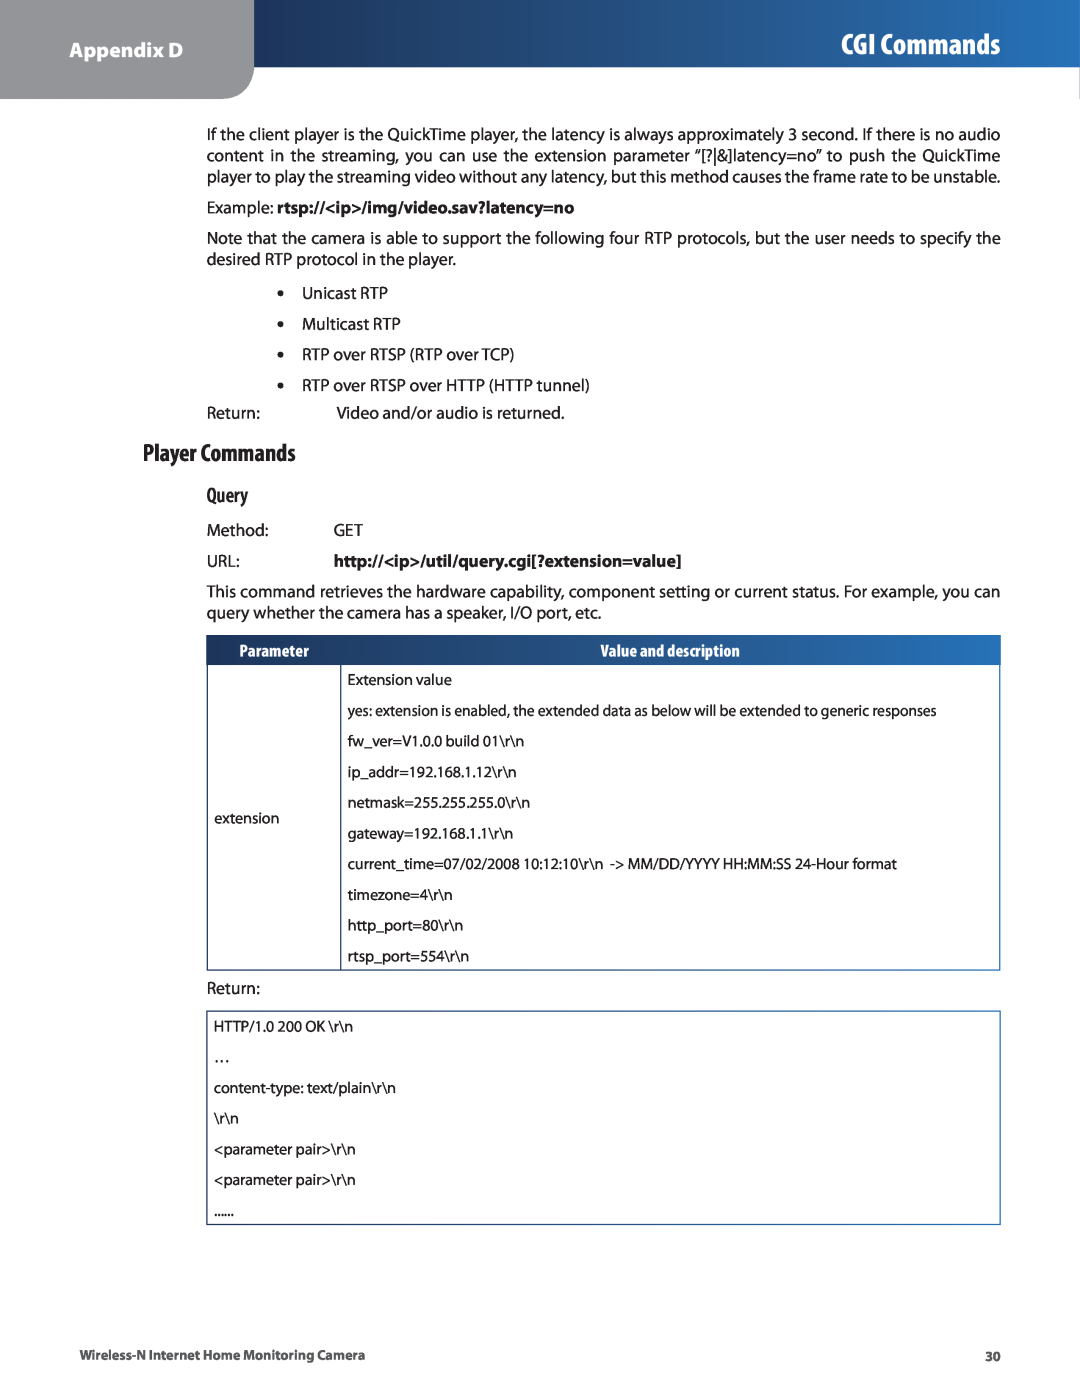 Cisco Systems WVC80N manual CGI Commands, Appendix D, Query, Parameter, Value and description 